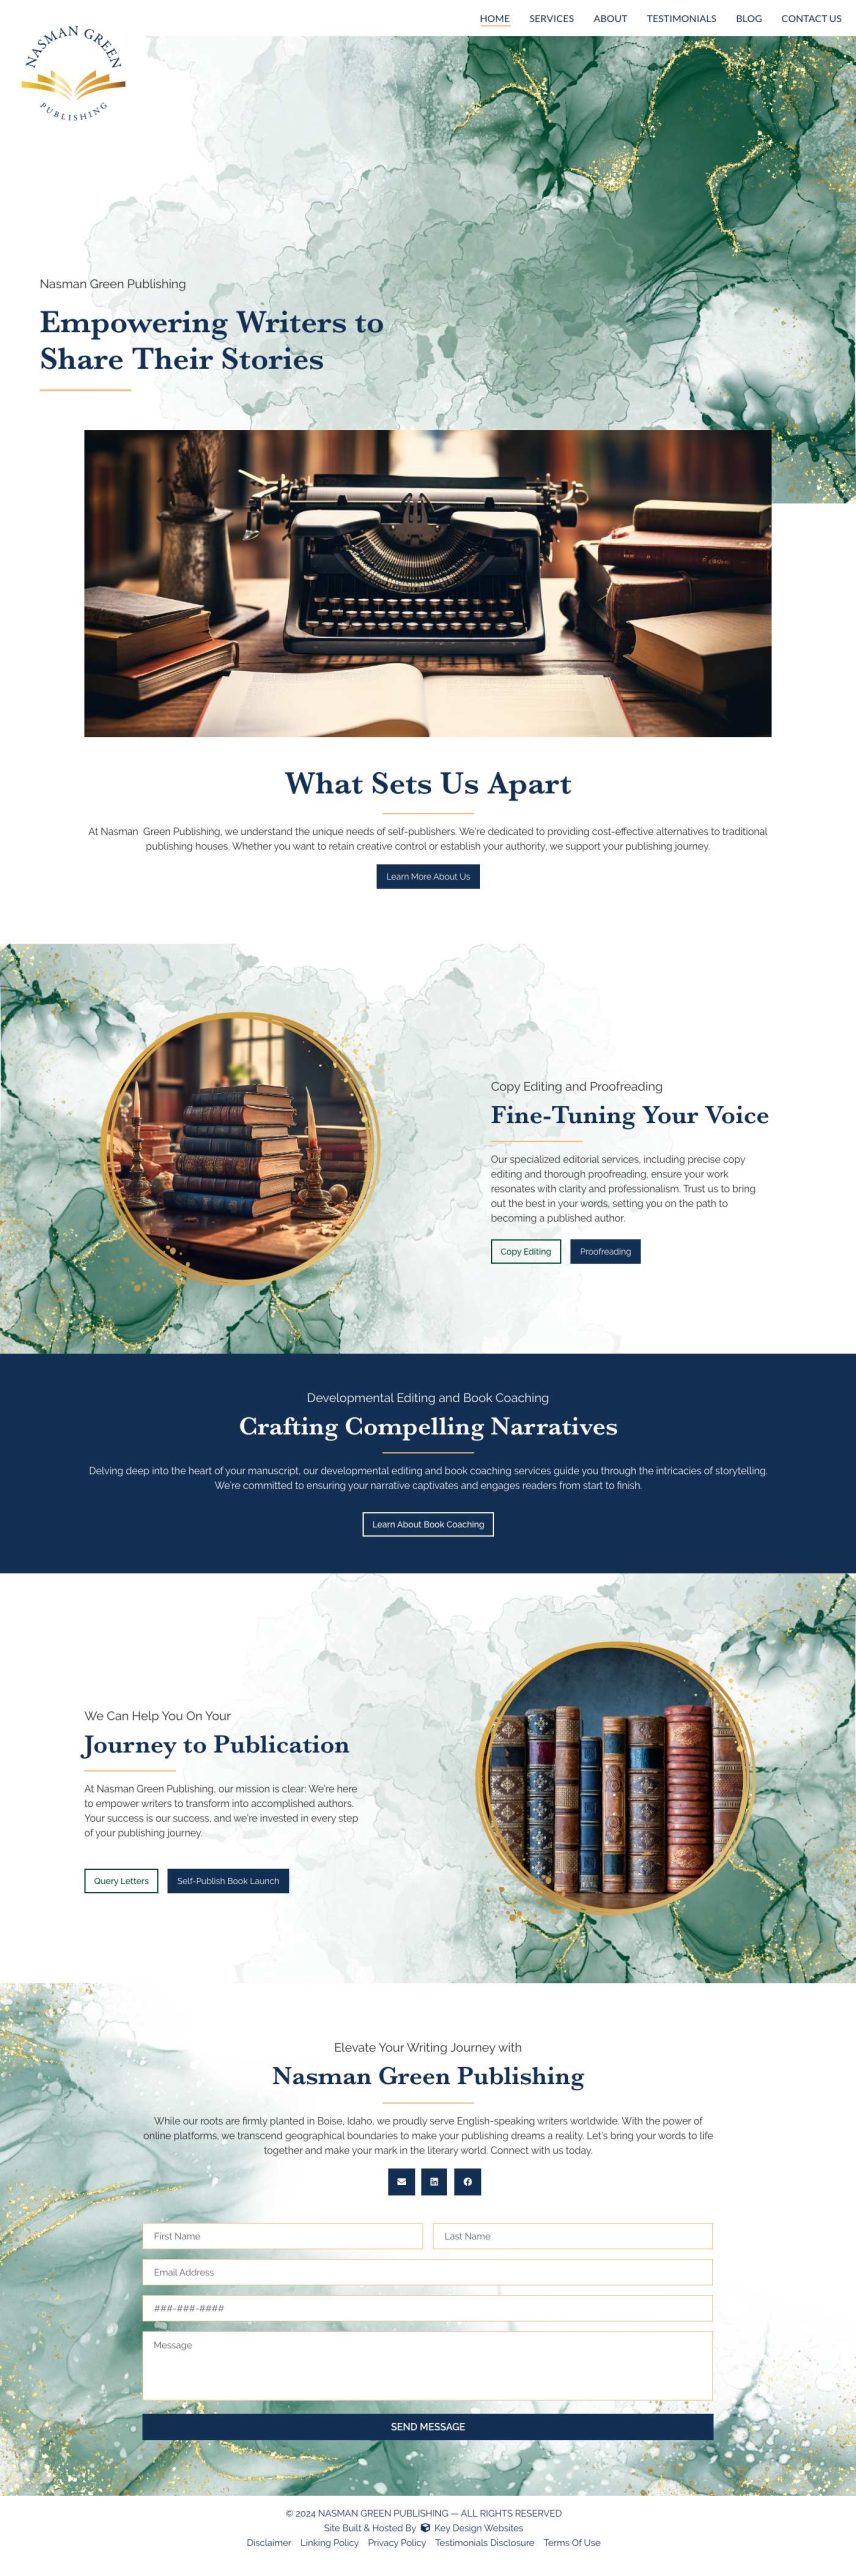 Screenshot of the Nasman Green Publishing website homepage.